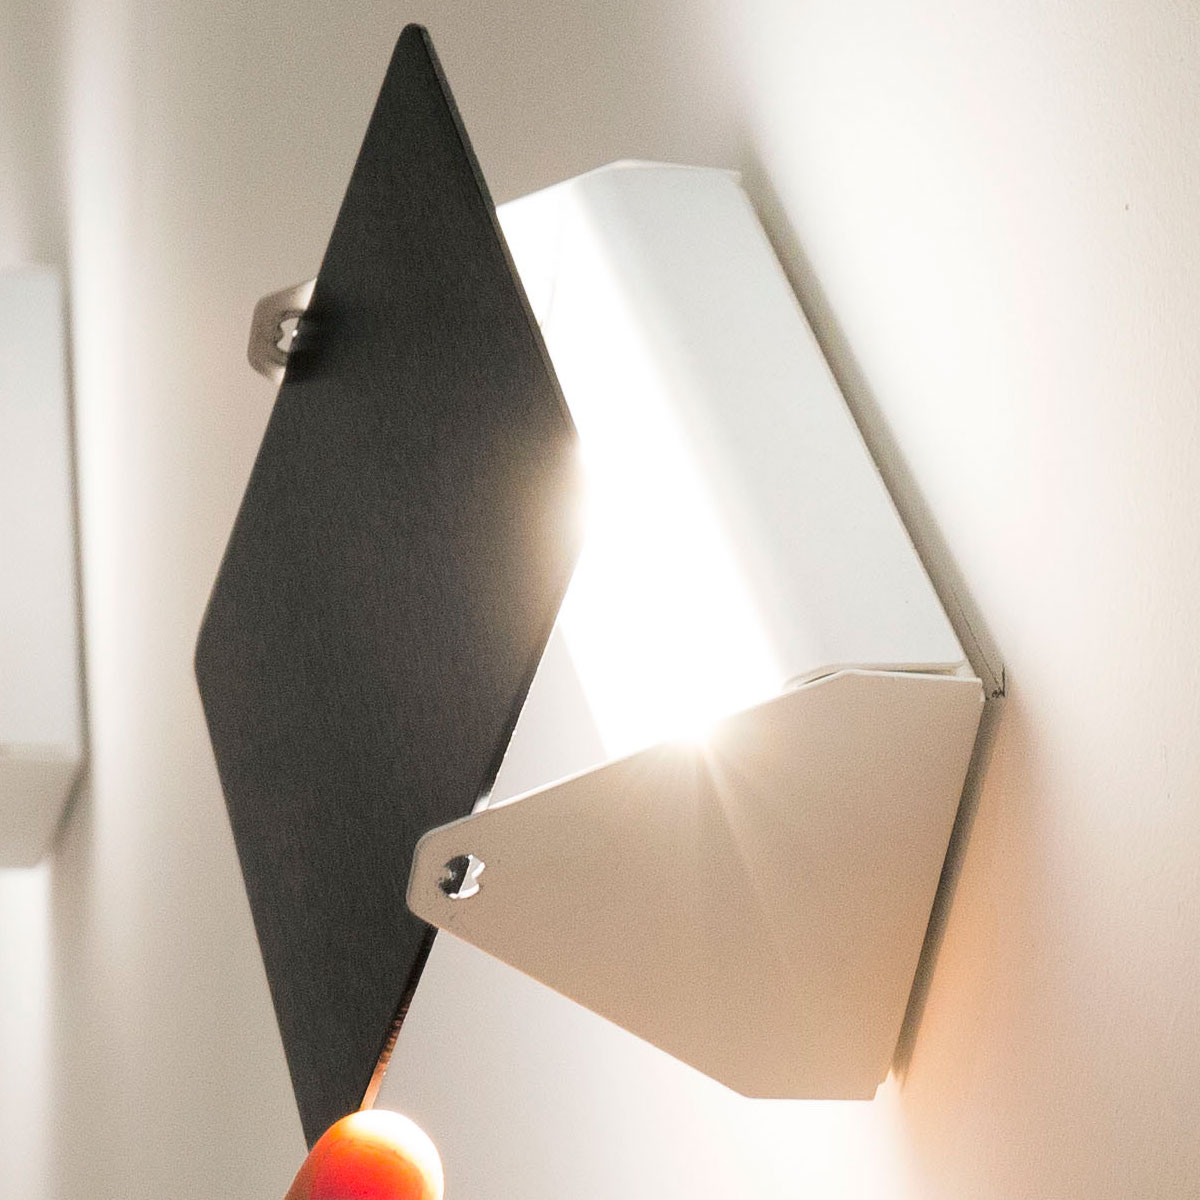 Applique a Volet Pivotant LED Wall Light by Nemo